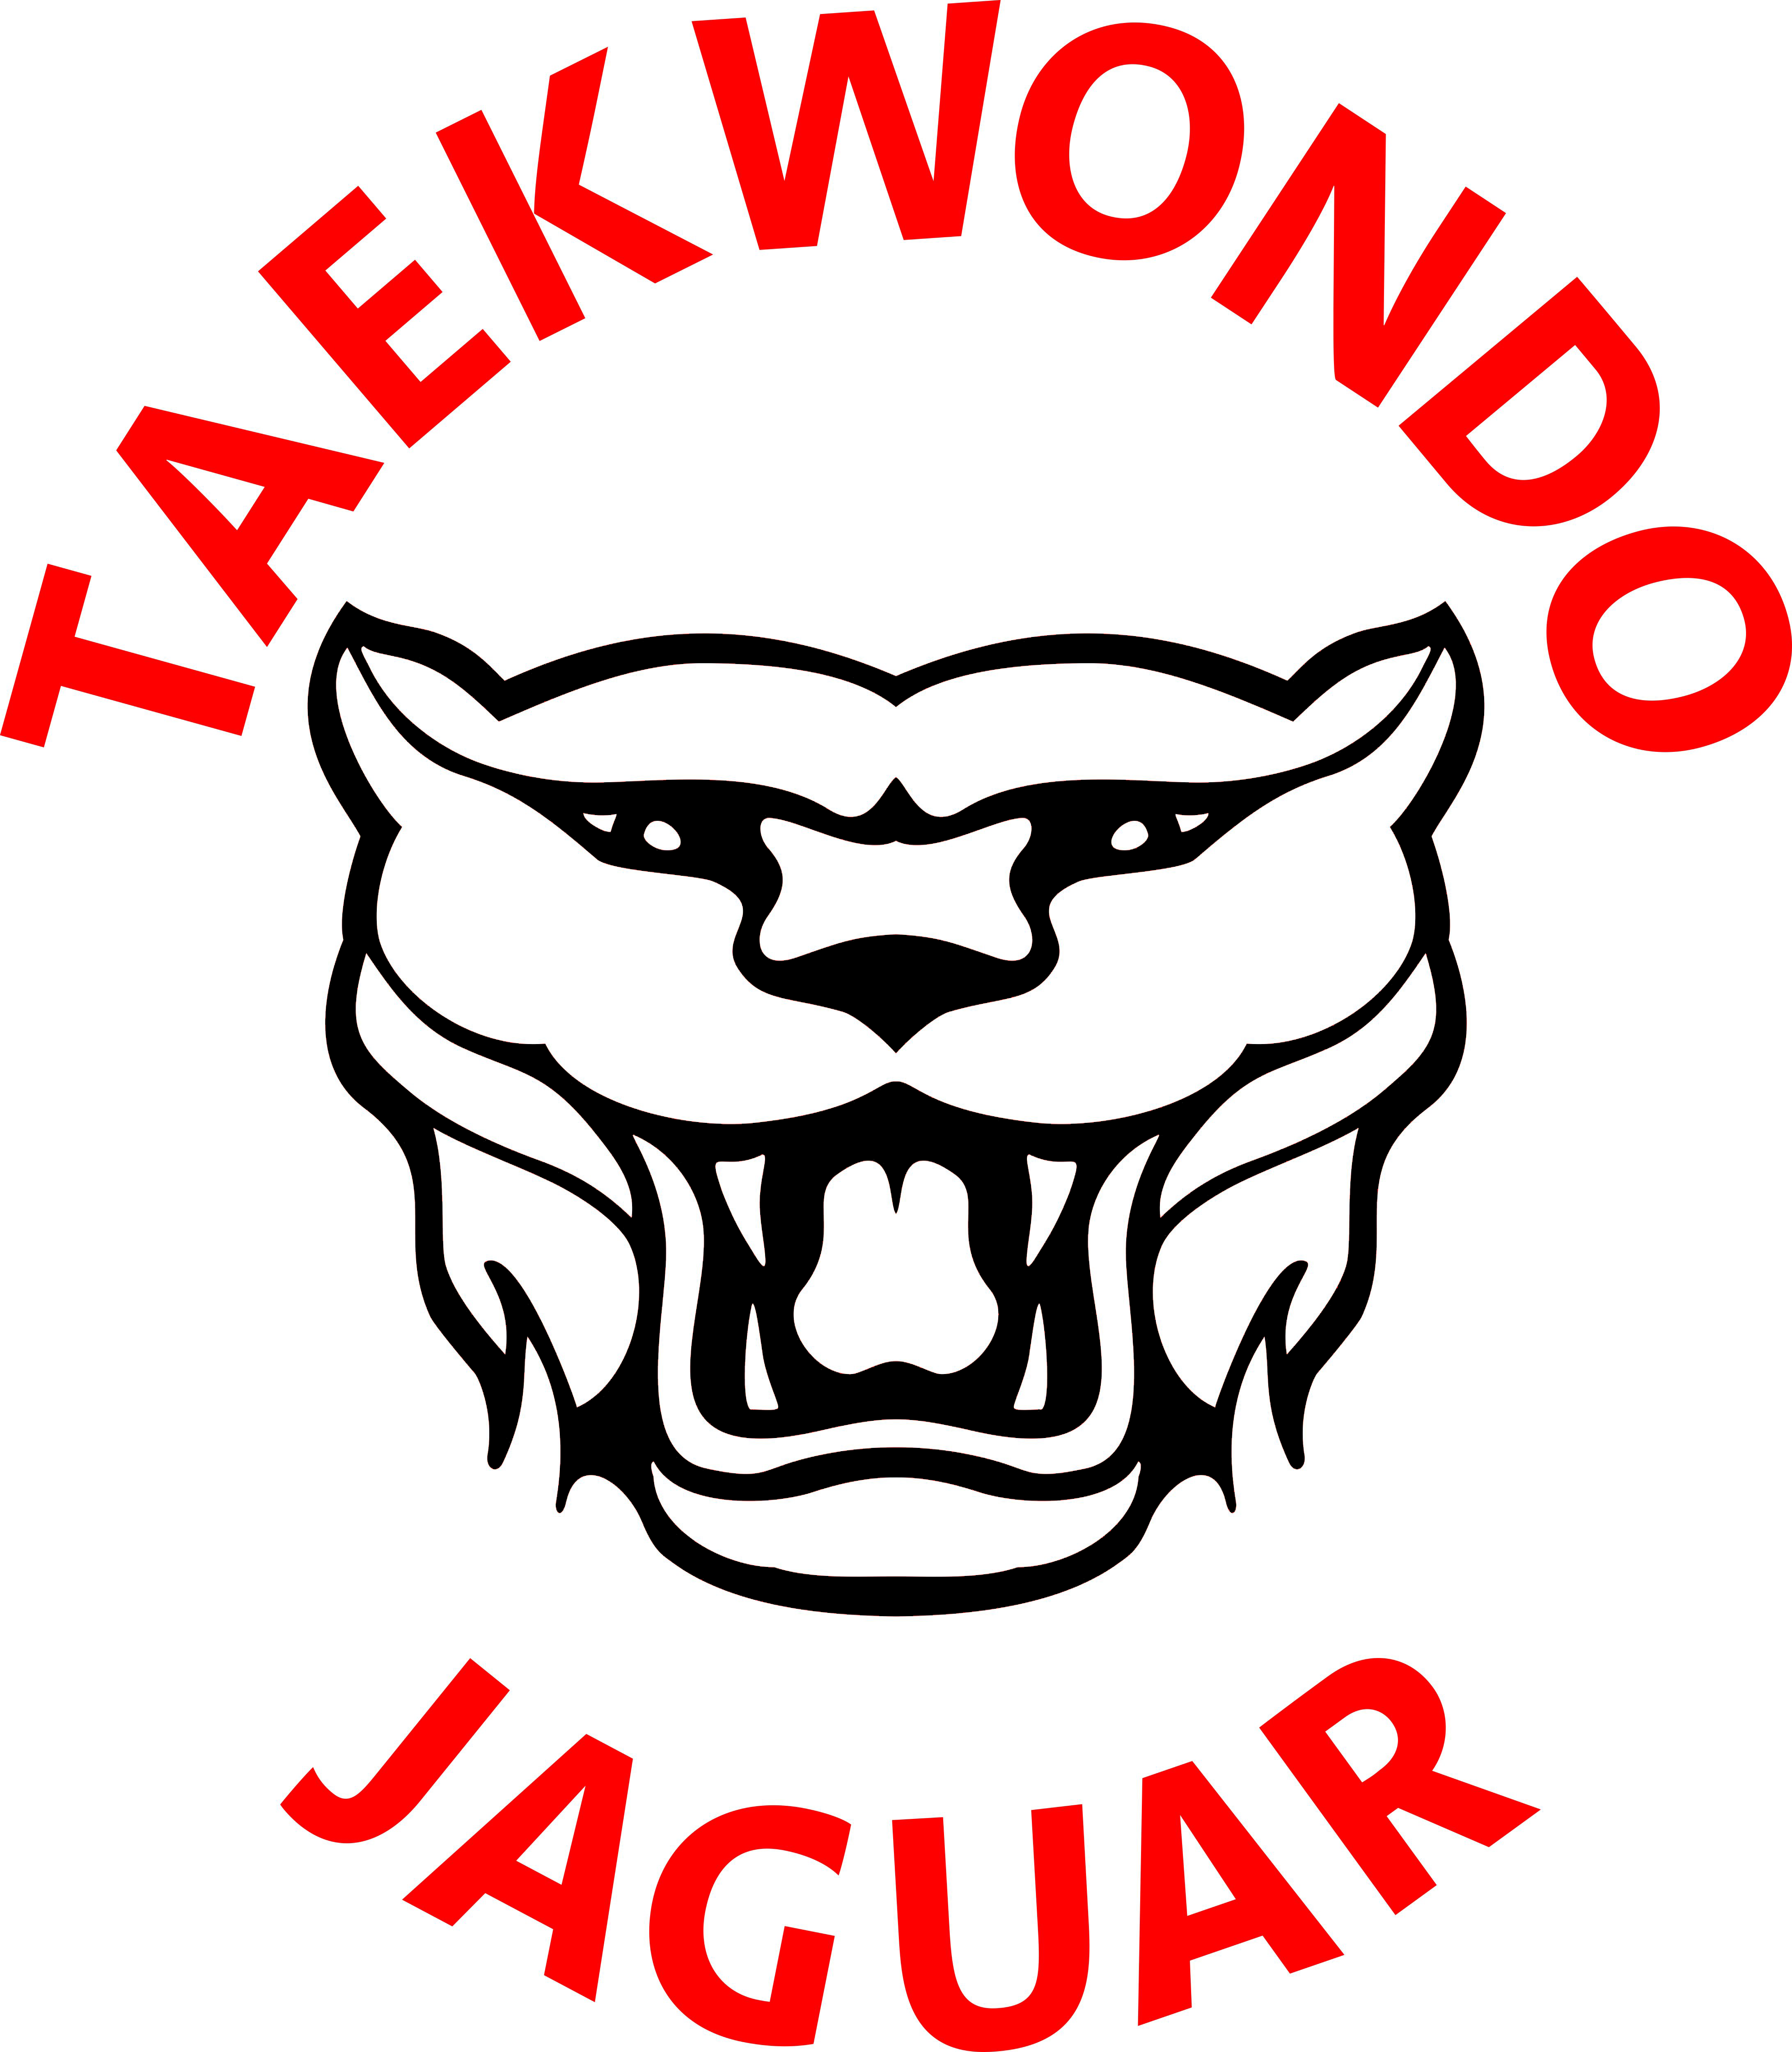 (c) Taekwondo-jaguar.de